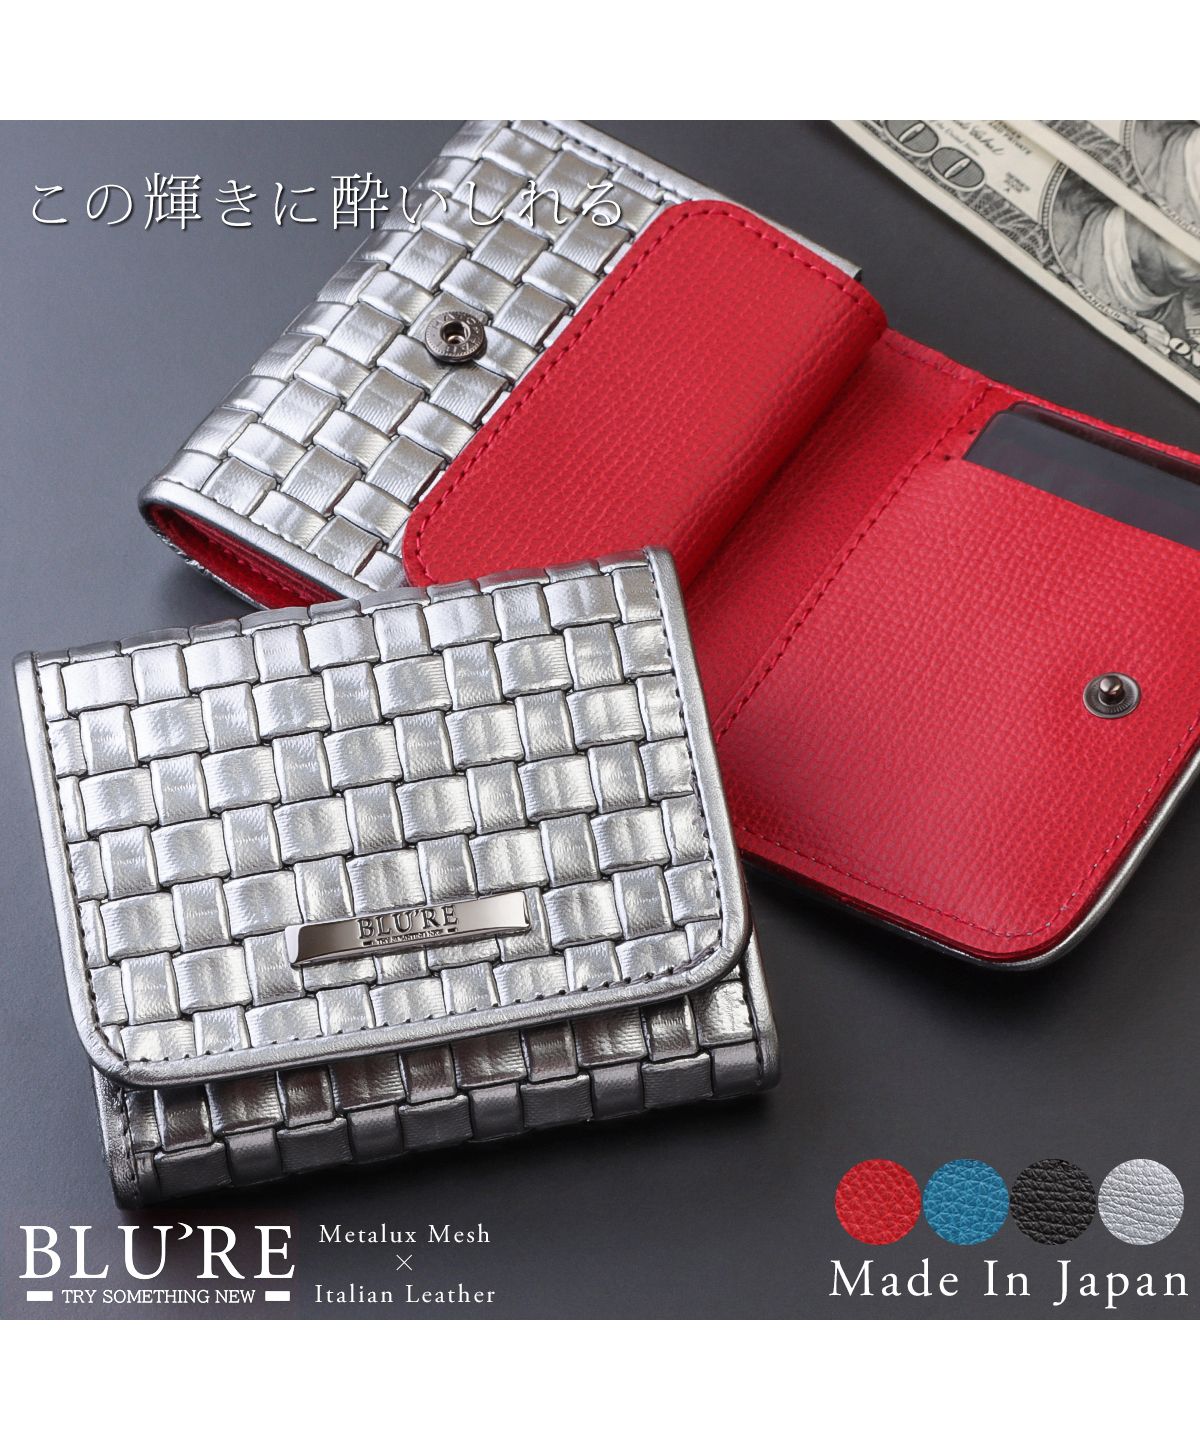 BLU'RE ブルーレ 財布 メンズ 二つ折り 本革 イタリアンレザー メタ 